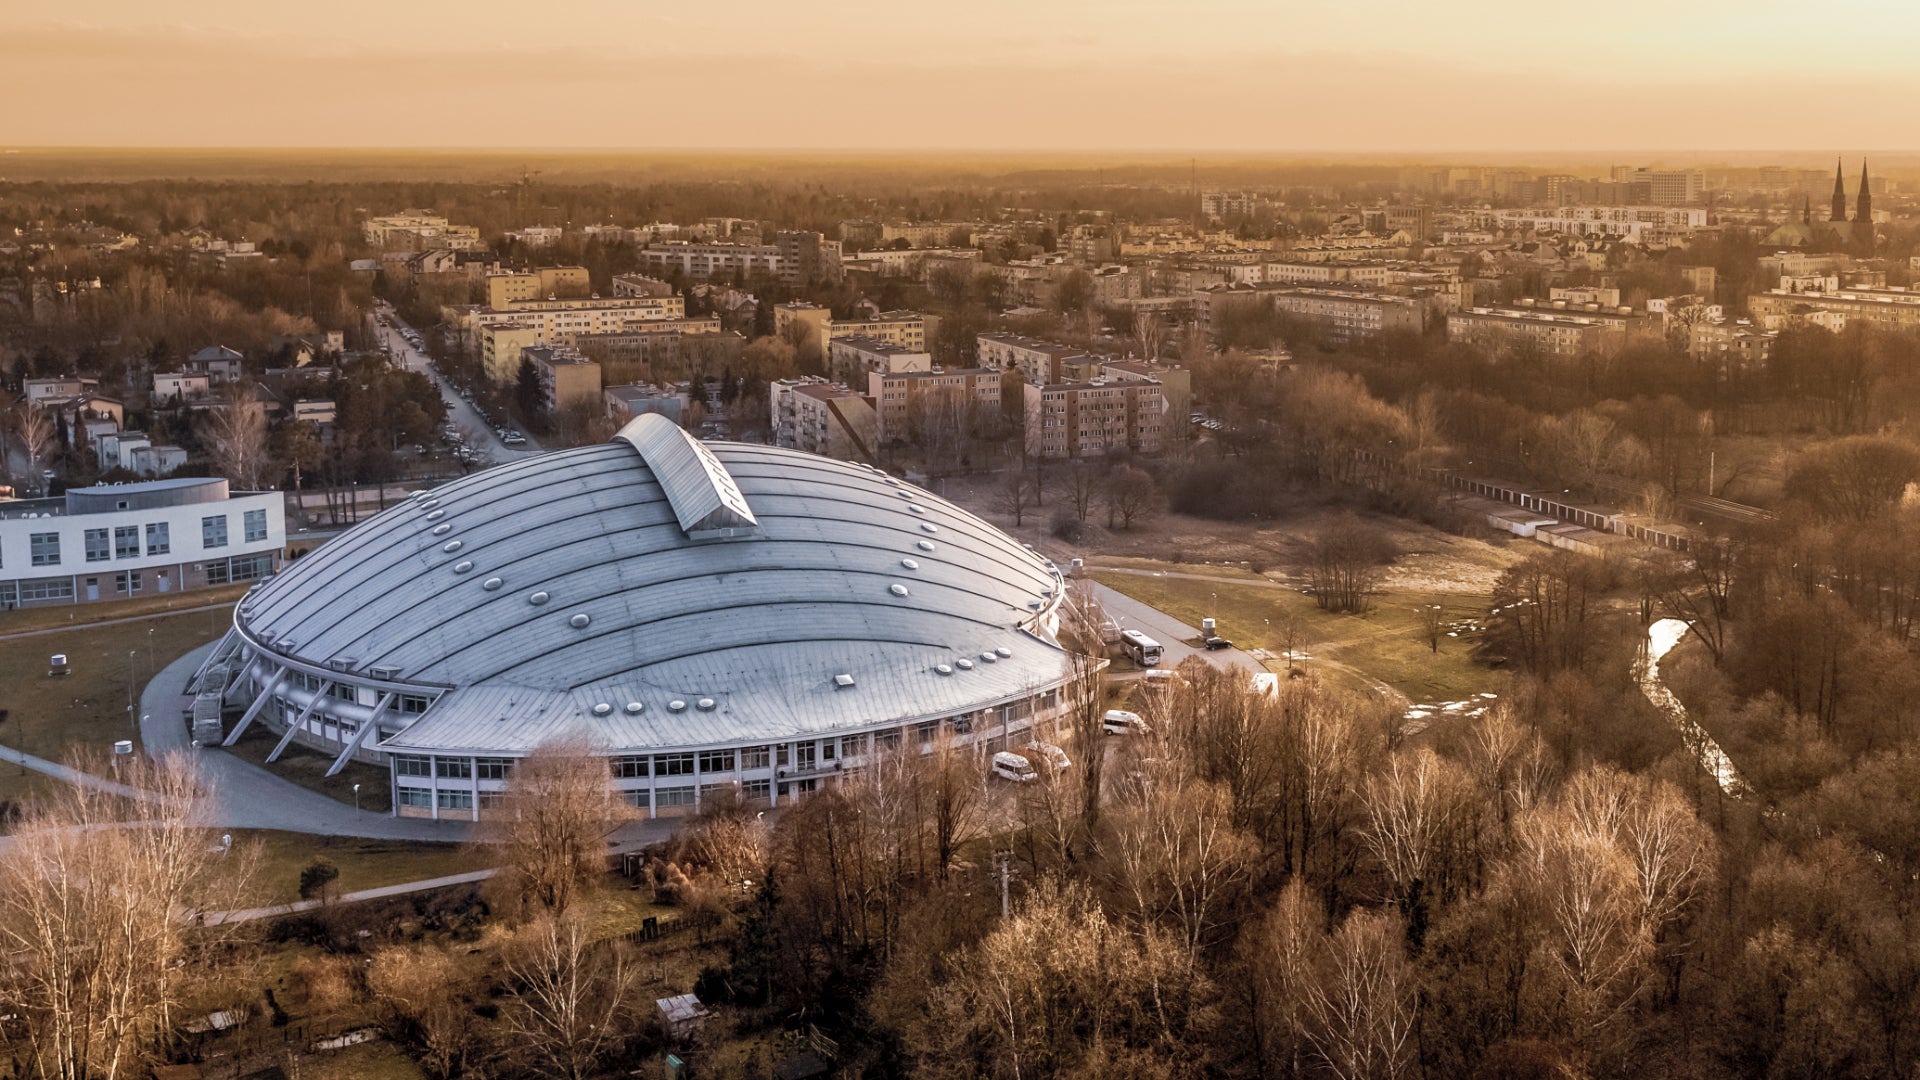 The arena pruszków Velodrome in Poland